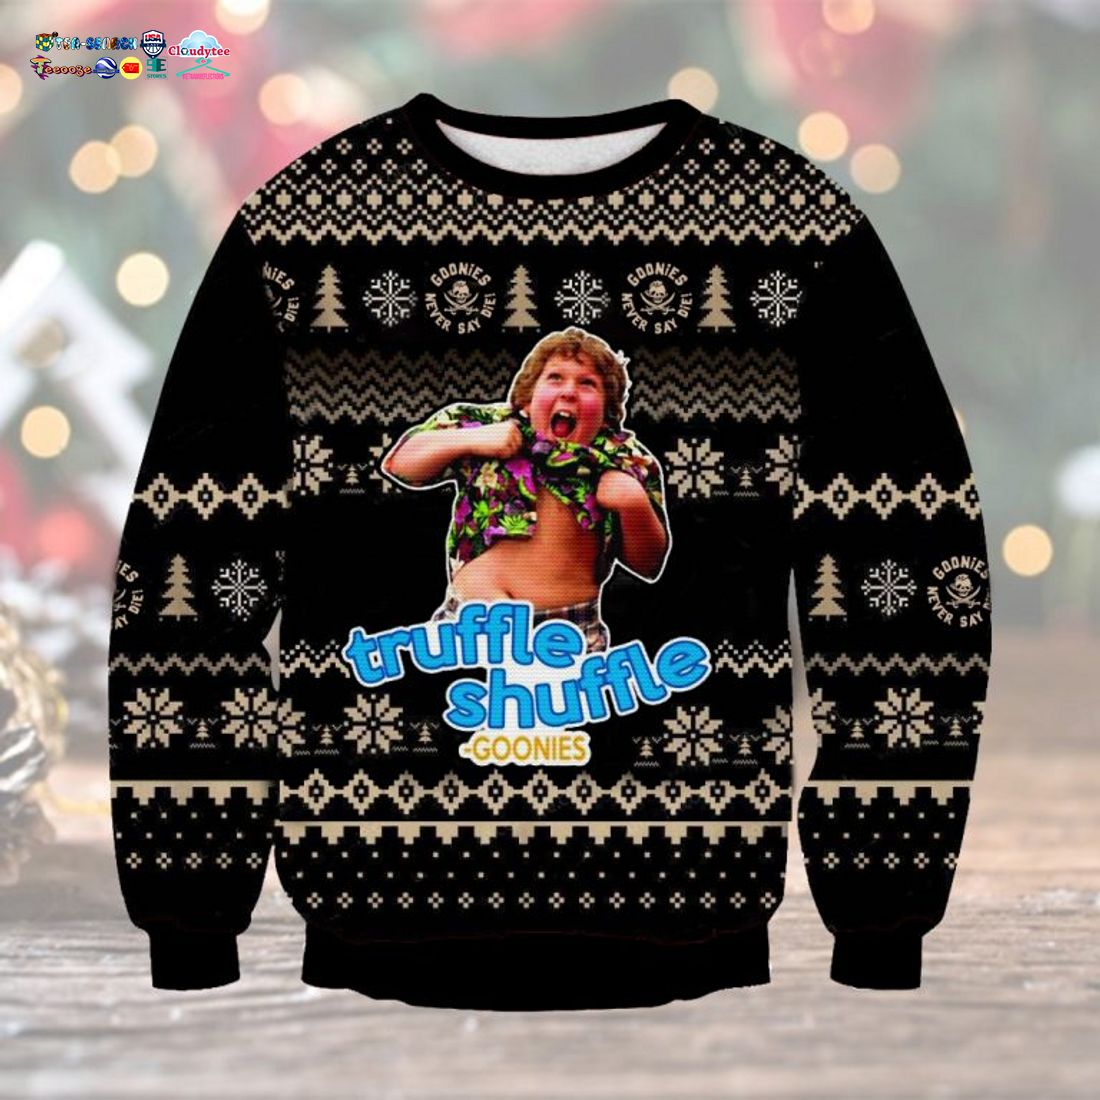 The Goonies Truffle Shuffle Ugly Christmas Sweater